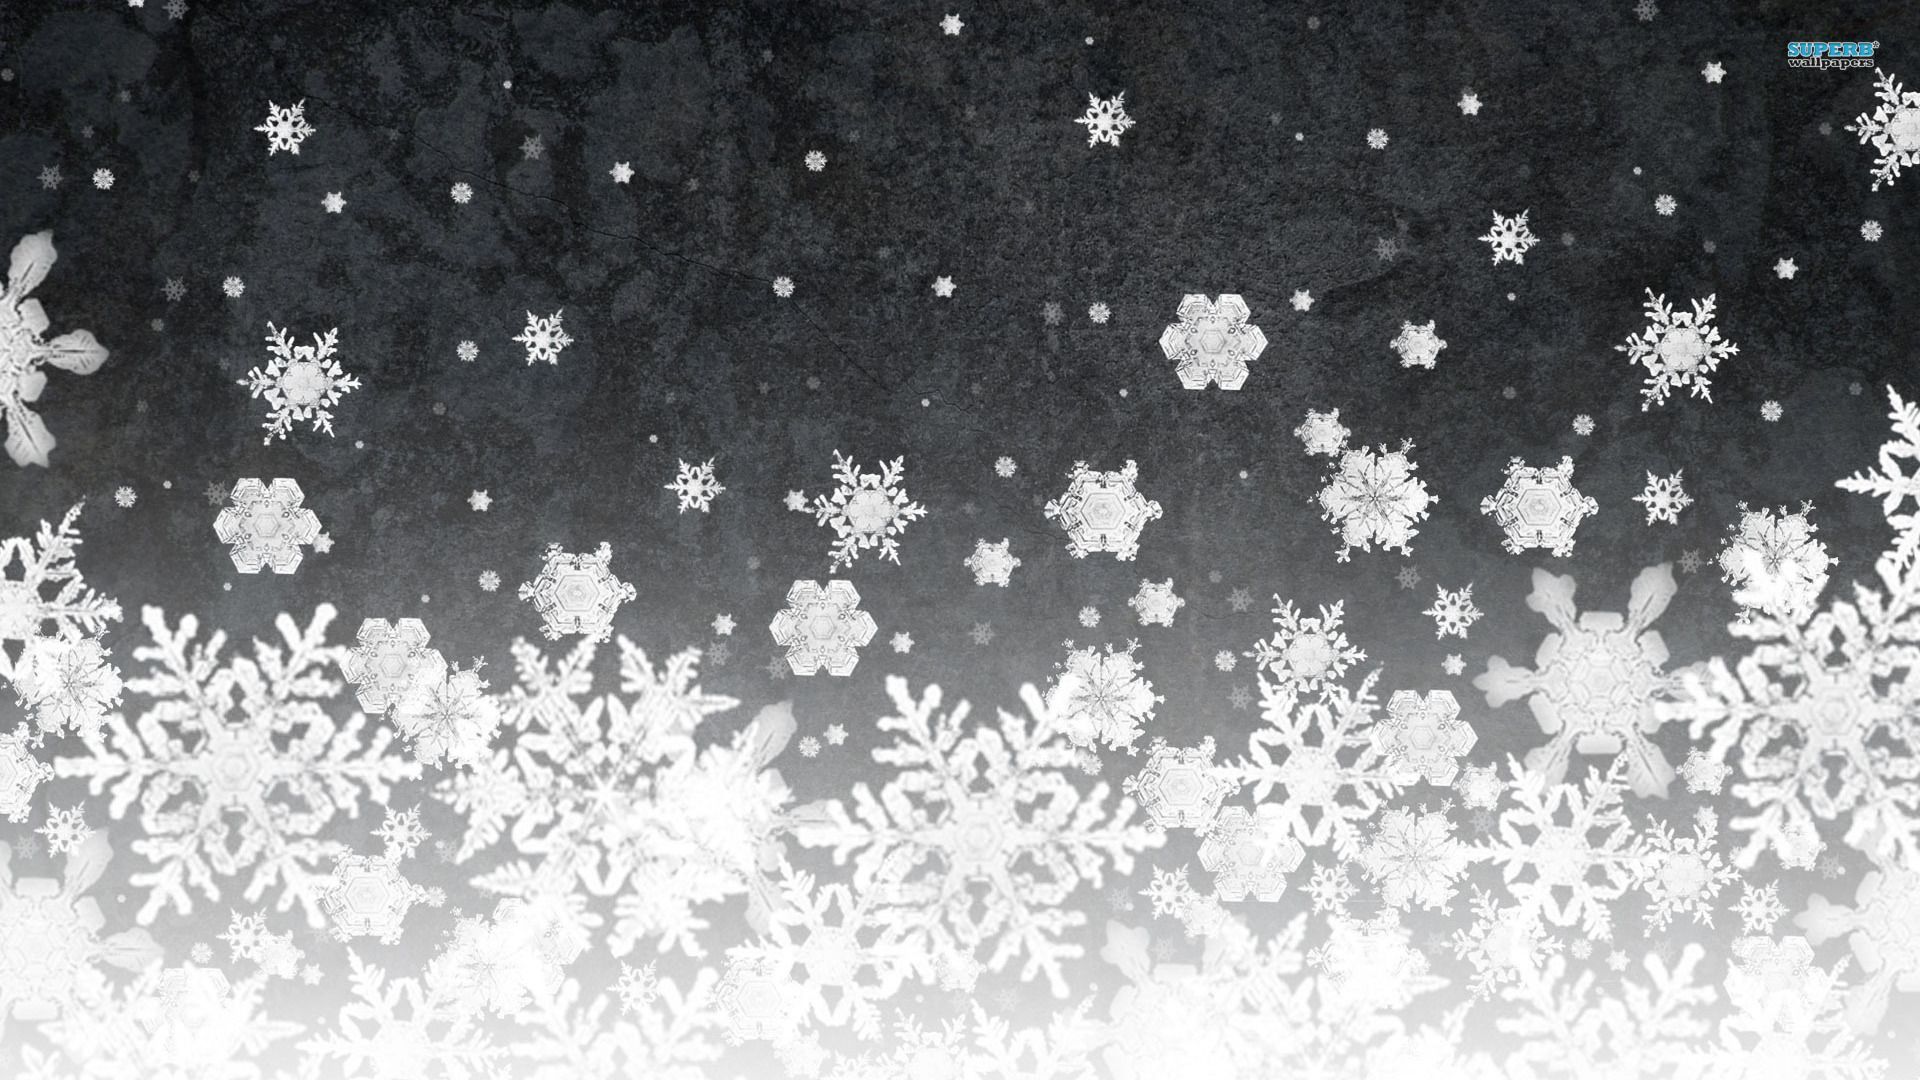 Snowflakes wallpaper - Artistic wallpapers -